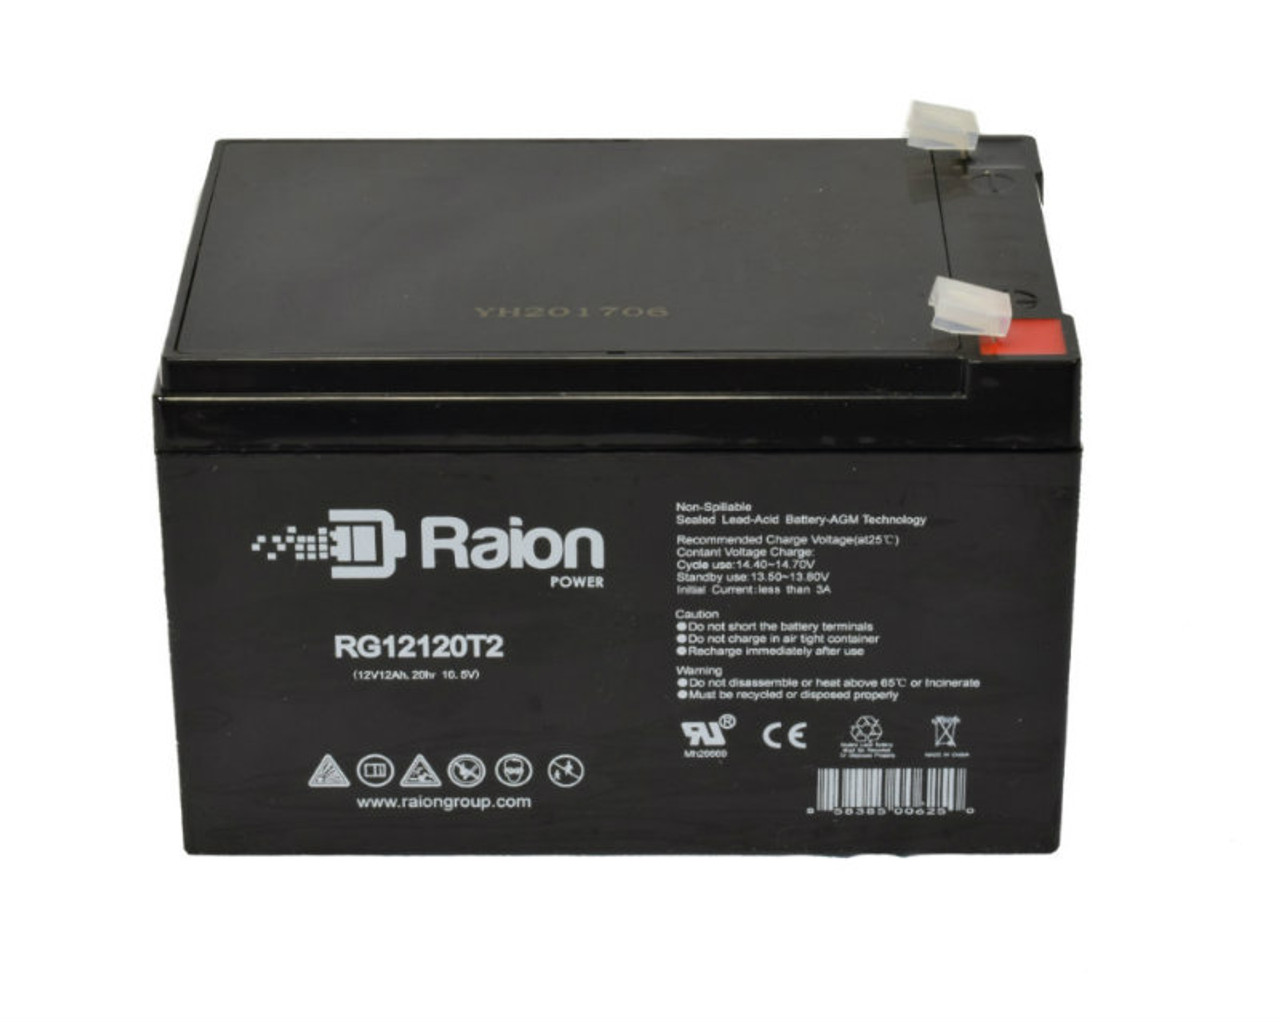 Raion Power RG12120T2 SLA Battery for Raion Power RG12120T2